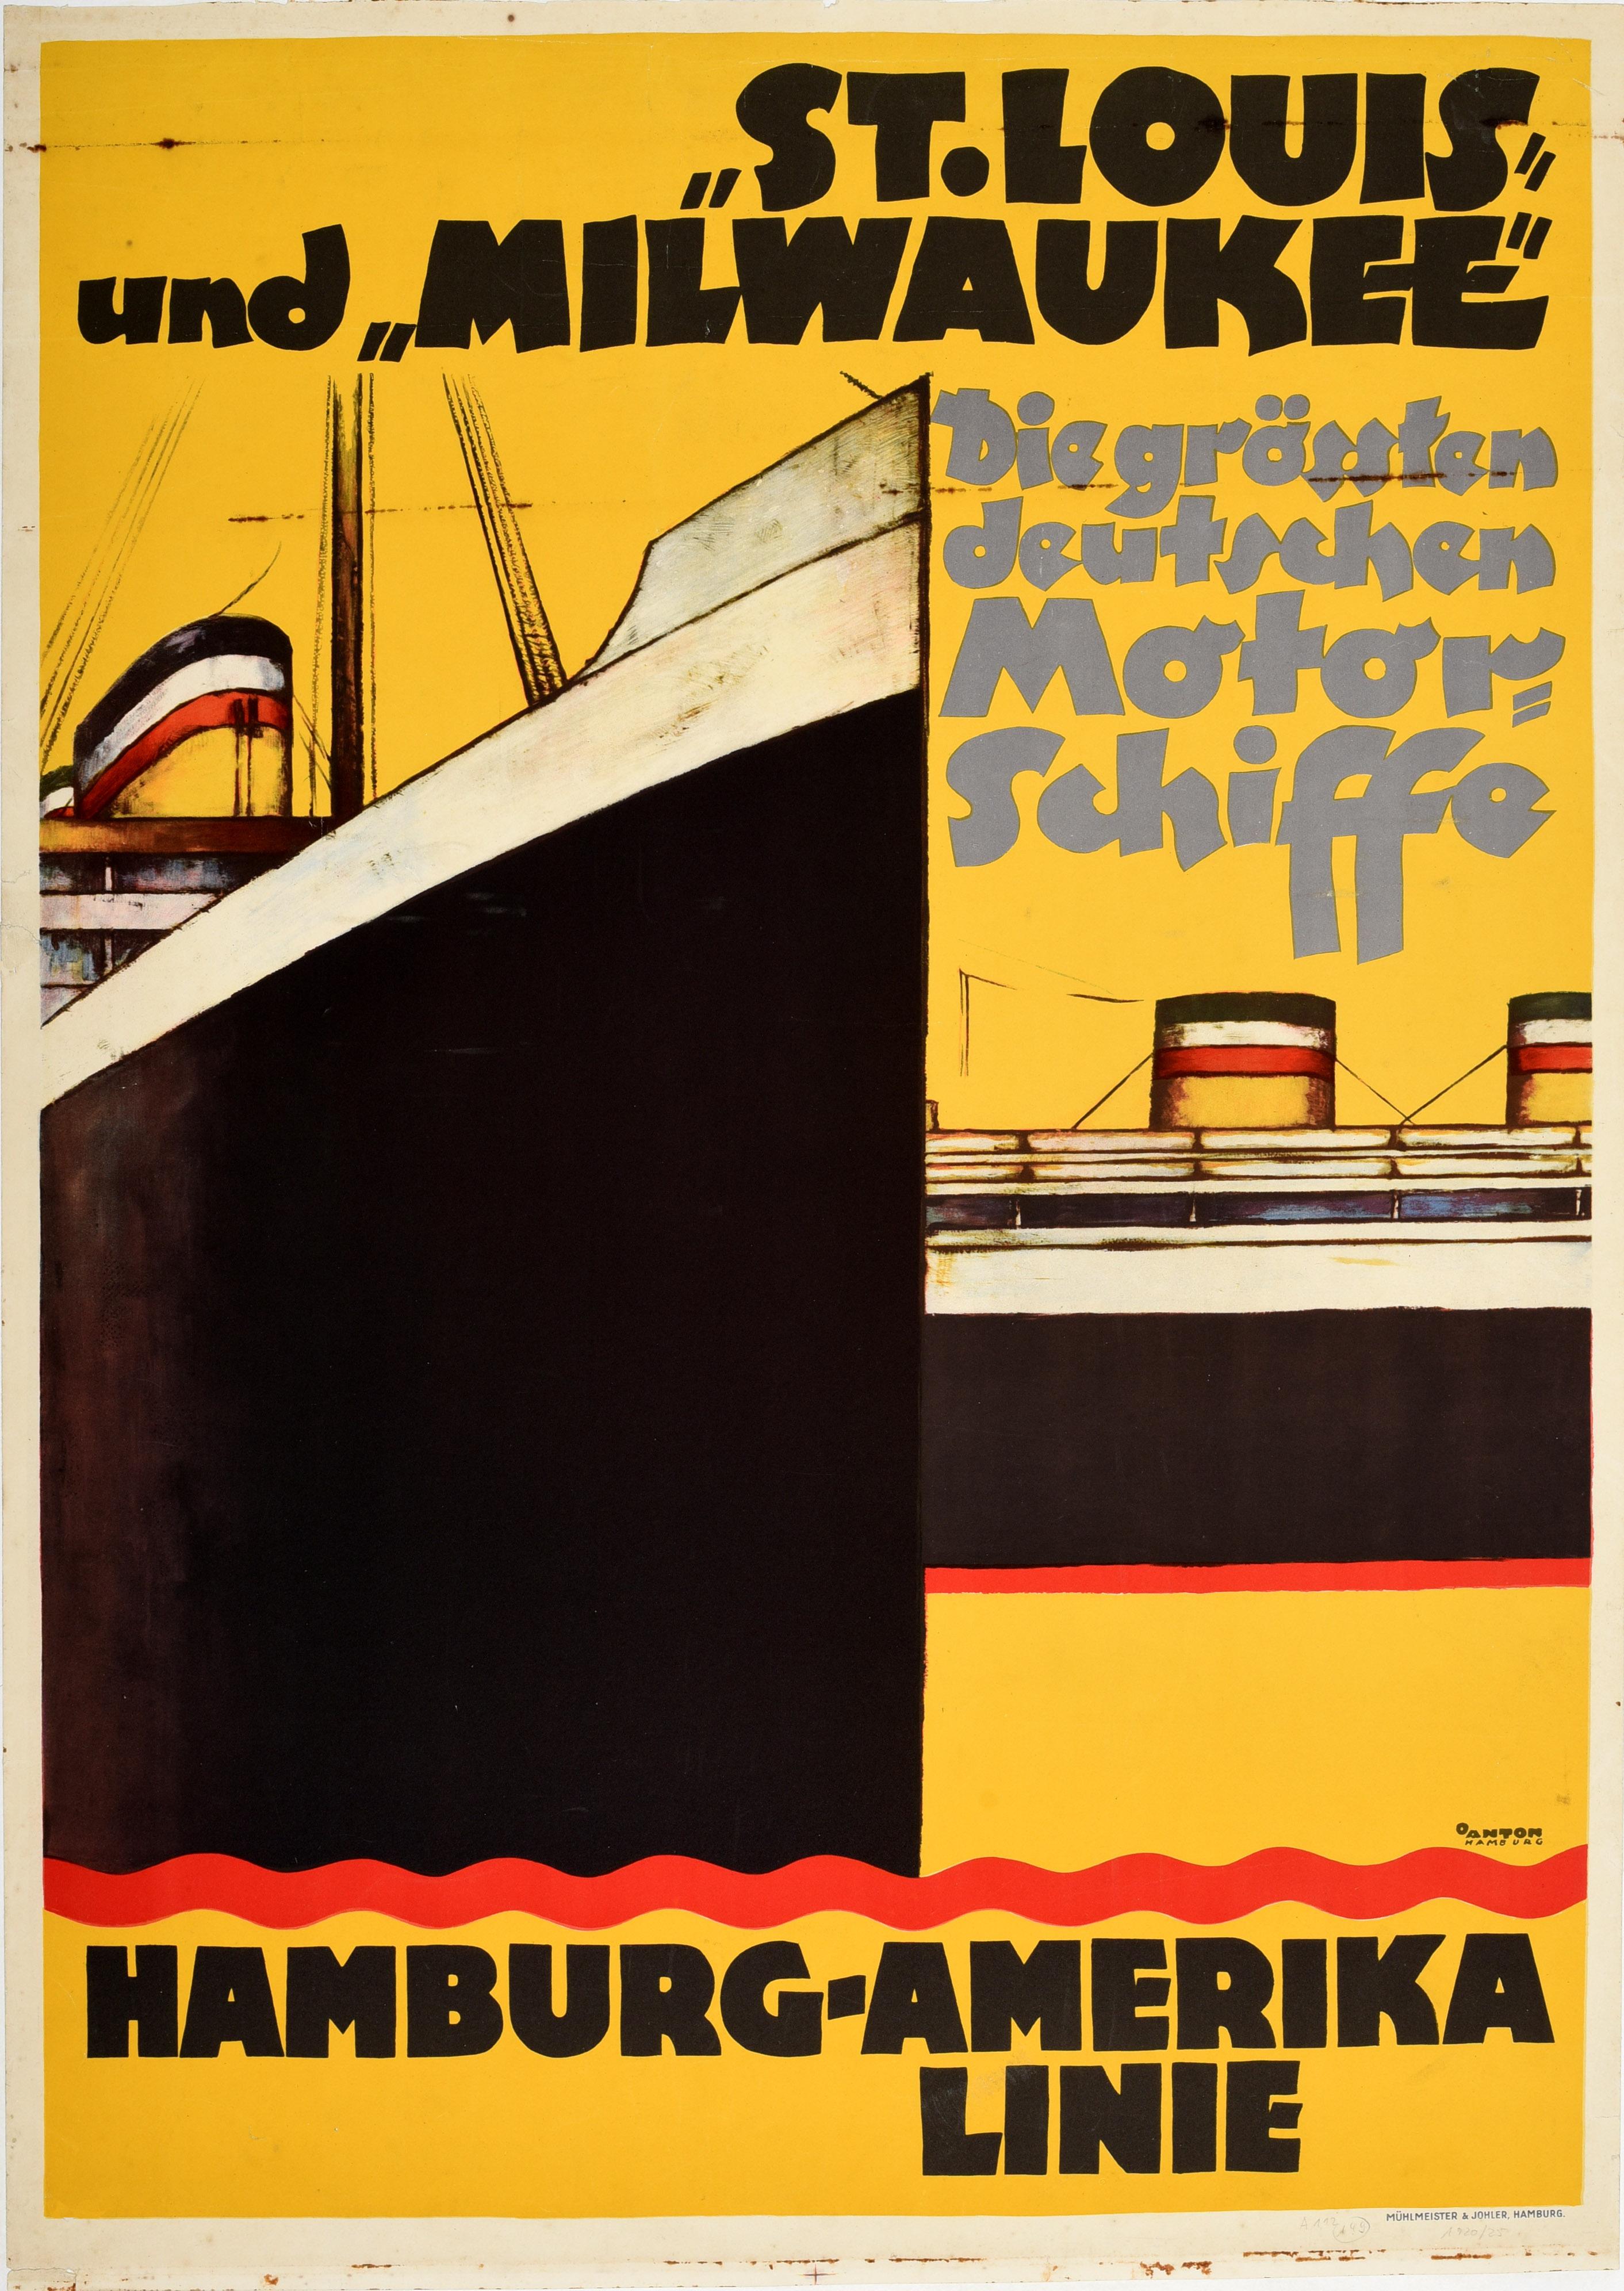 Ottomar Anton Print - Original Vintage Poster Hamburg Amerika Line St Louis & Milwaukee Cruise Travel